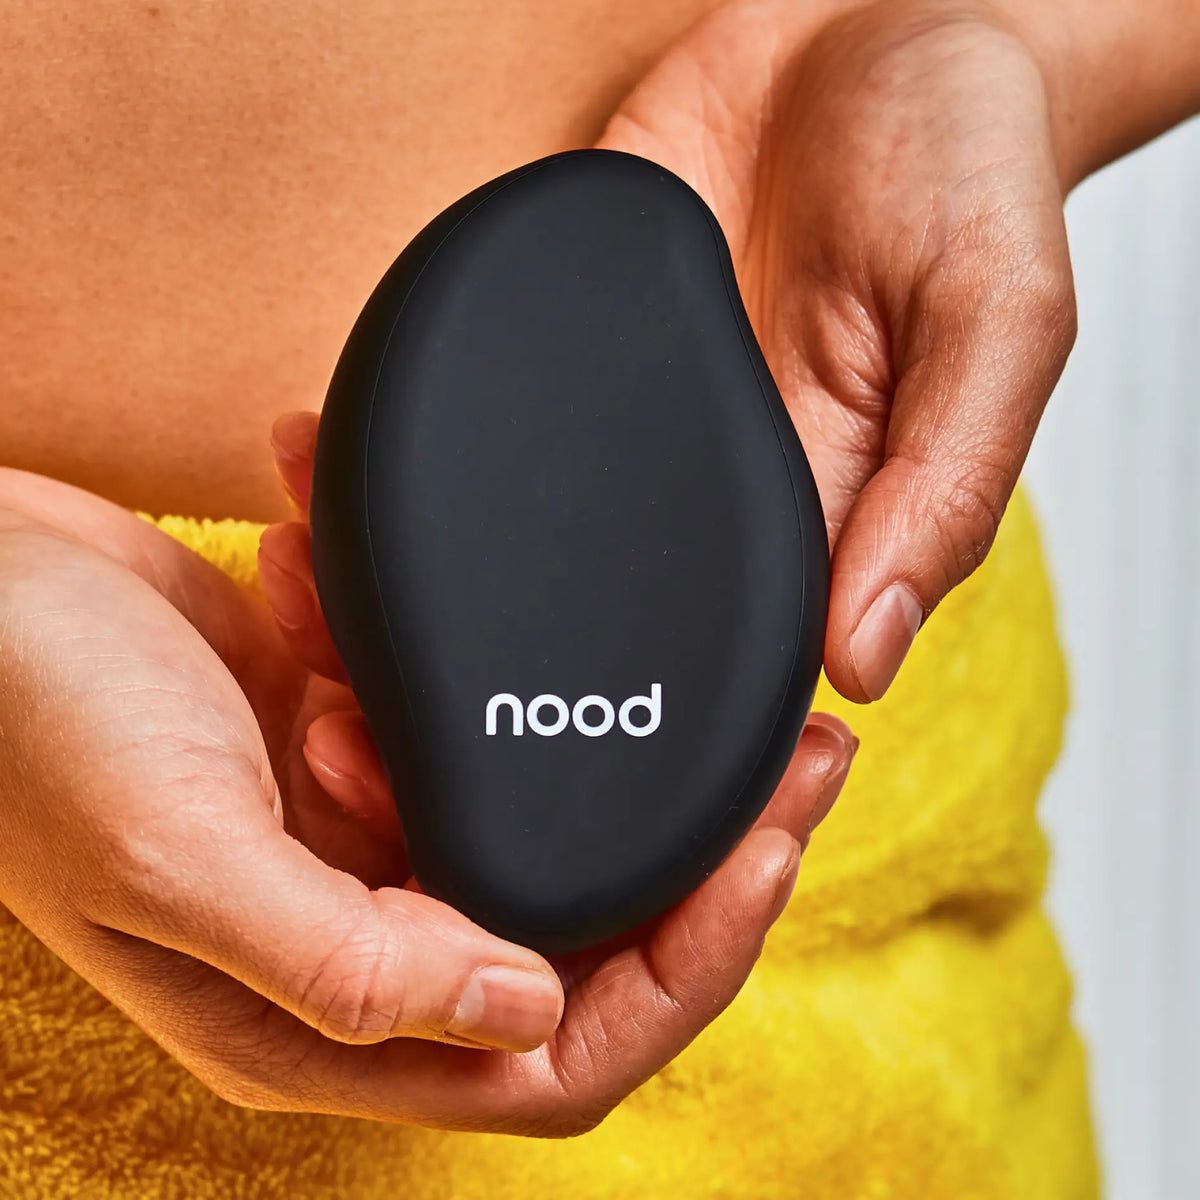 The Eraser | nood